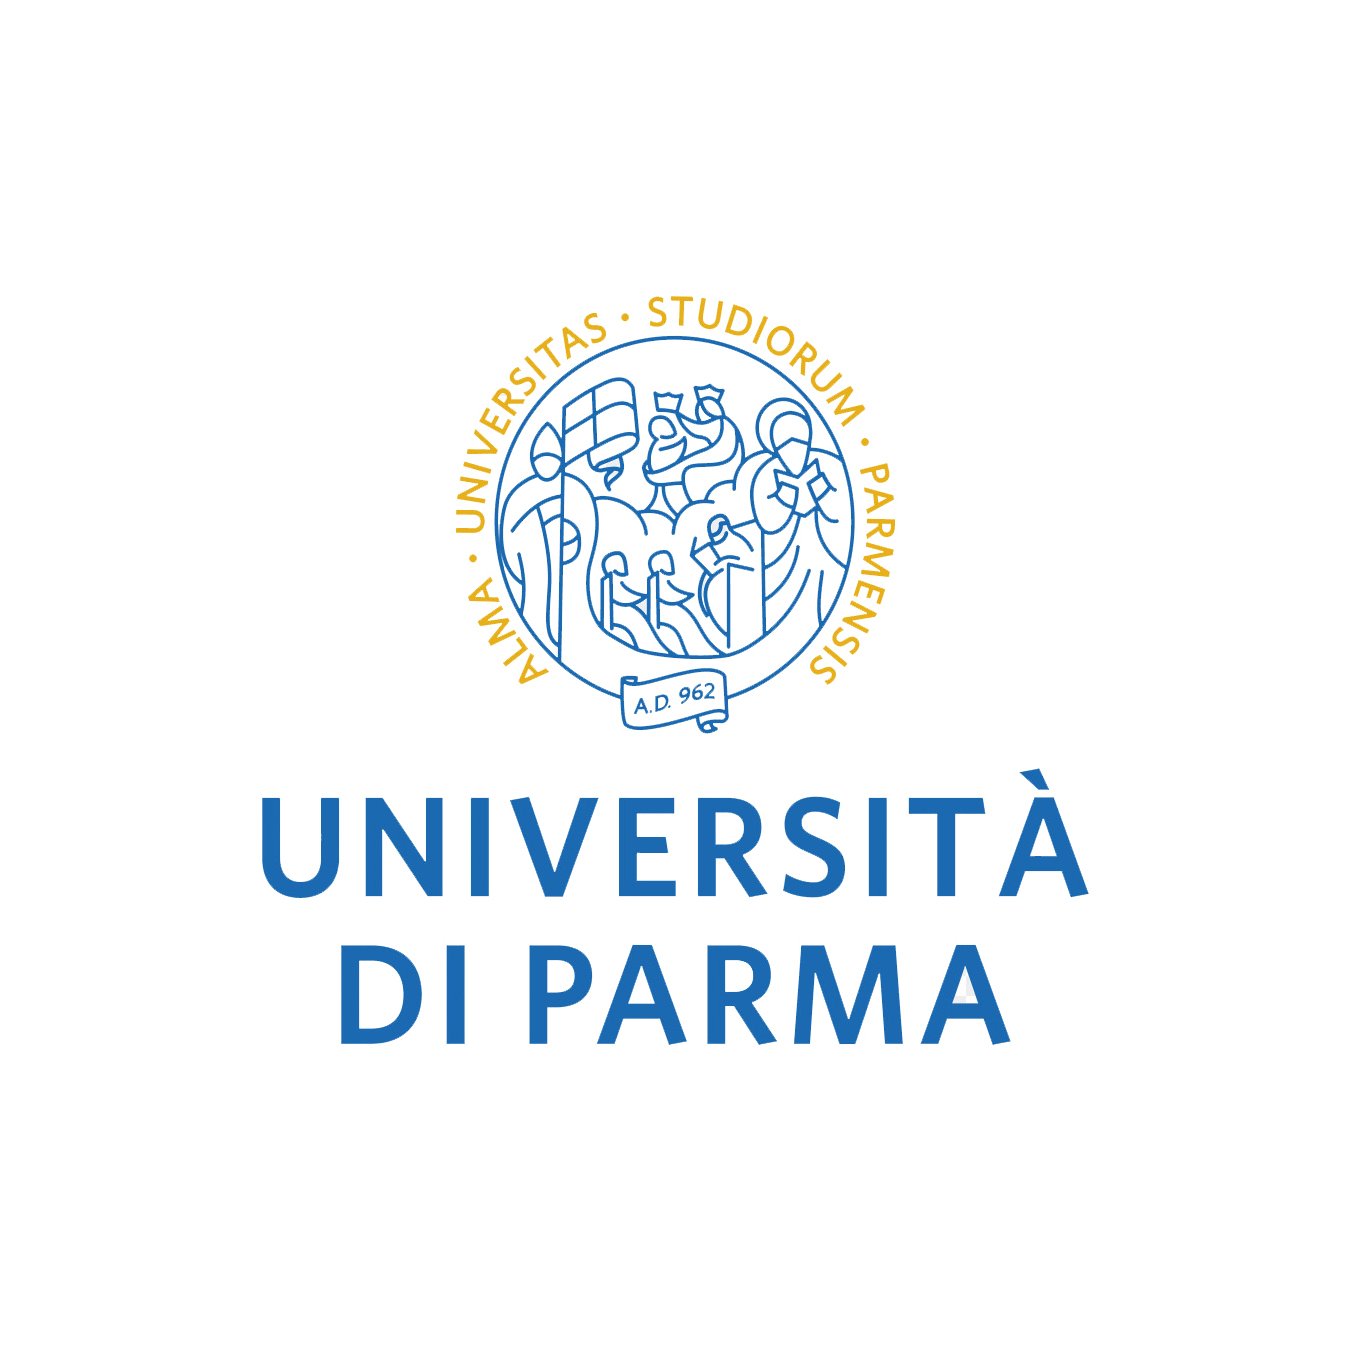 kisspng-university-of-parma-logo-organization-brand-wikipedia-universit-degli-studi-di-parma-ampq-5bfb0fe41a6a14.1242303815431802601082.jpg